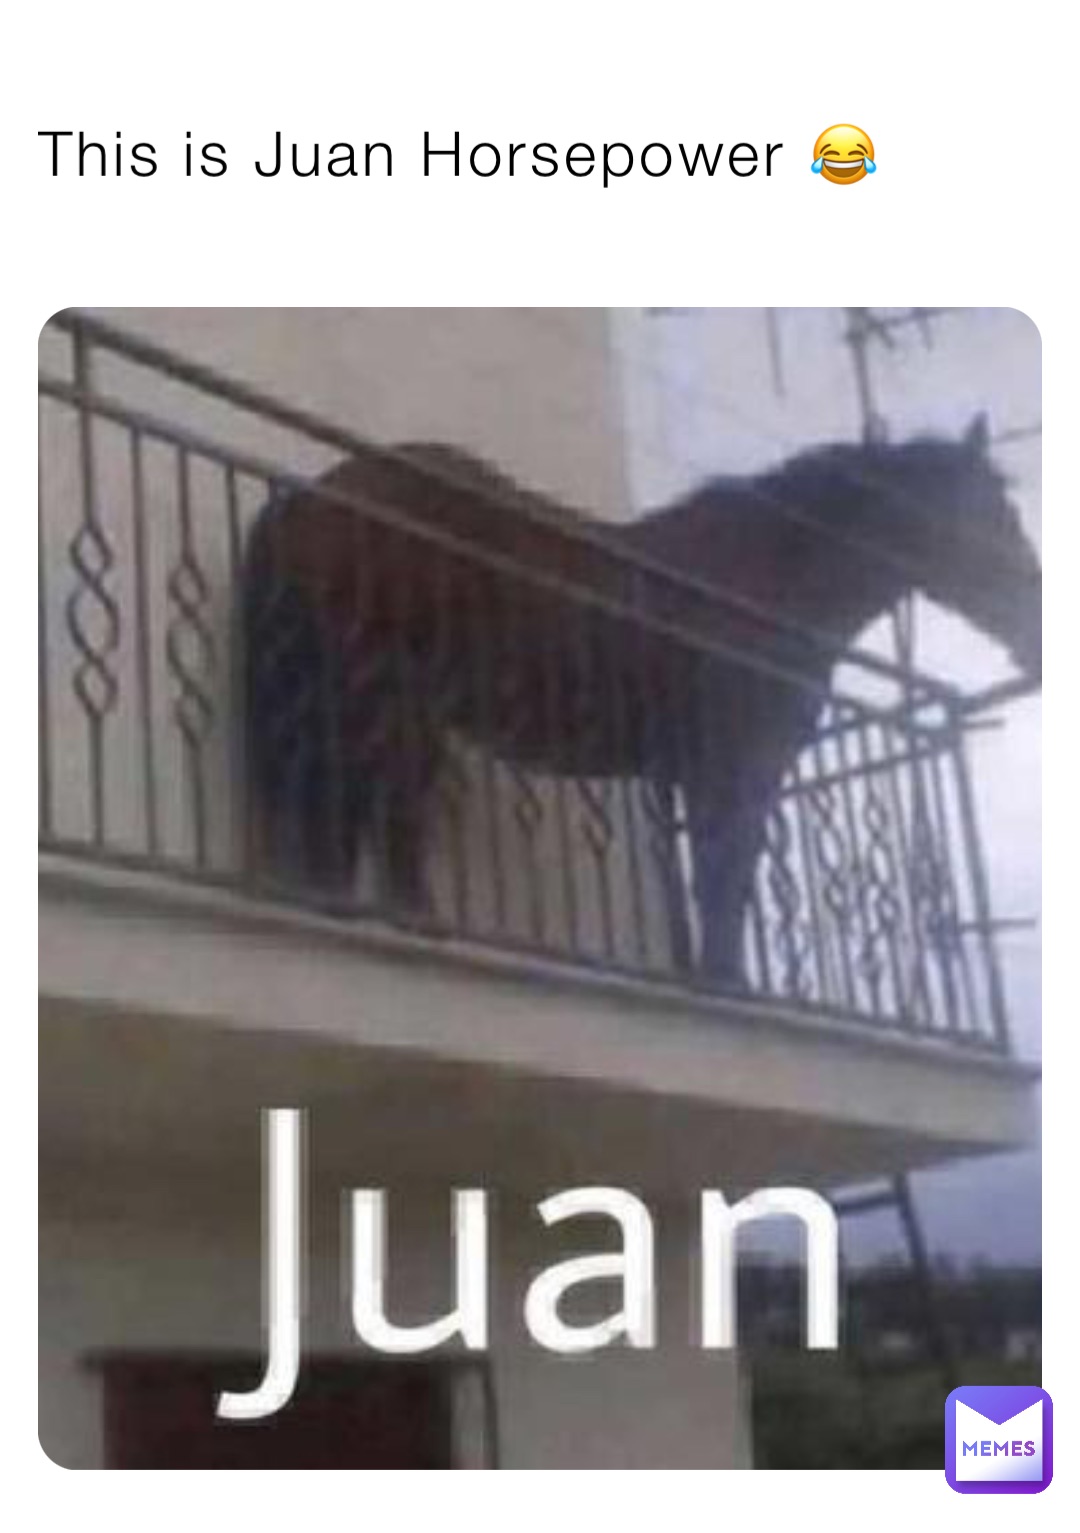 This is Juan Horsepower 😂